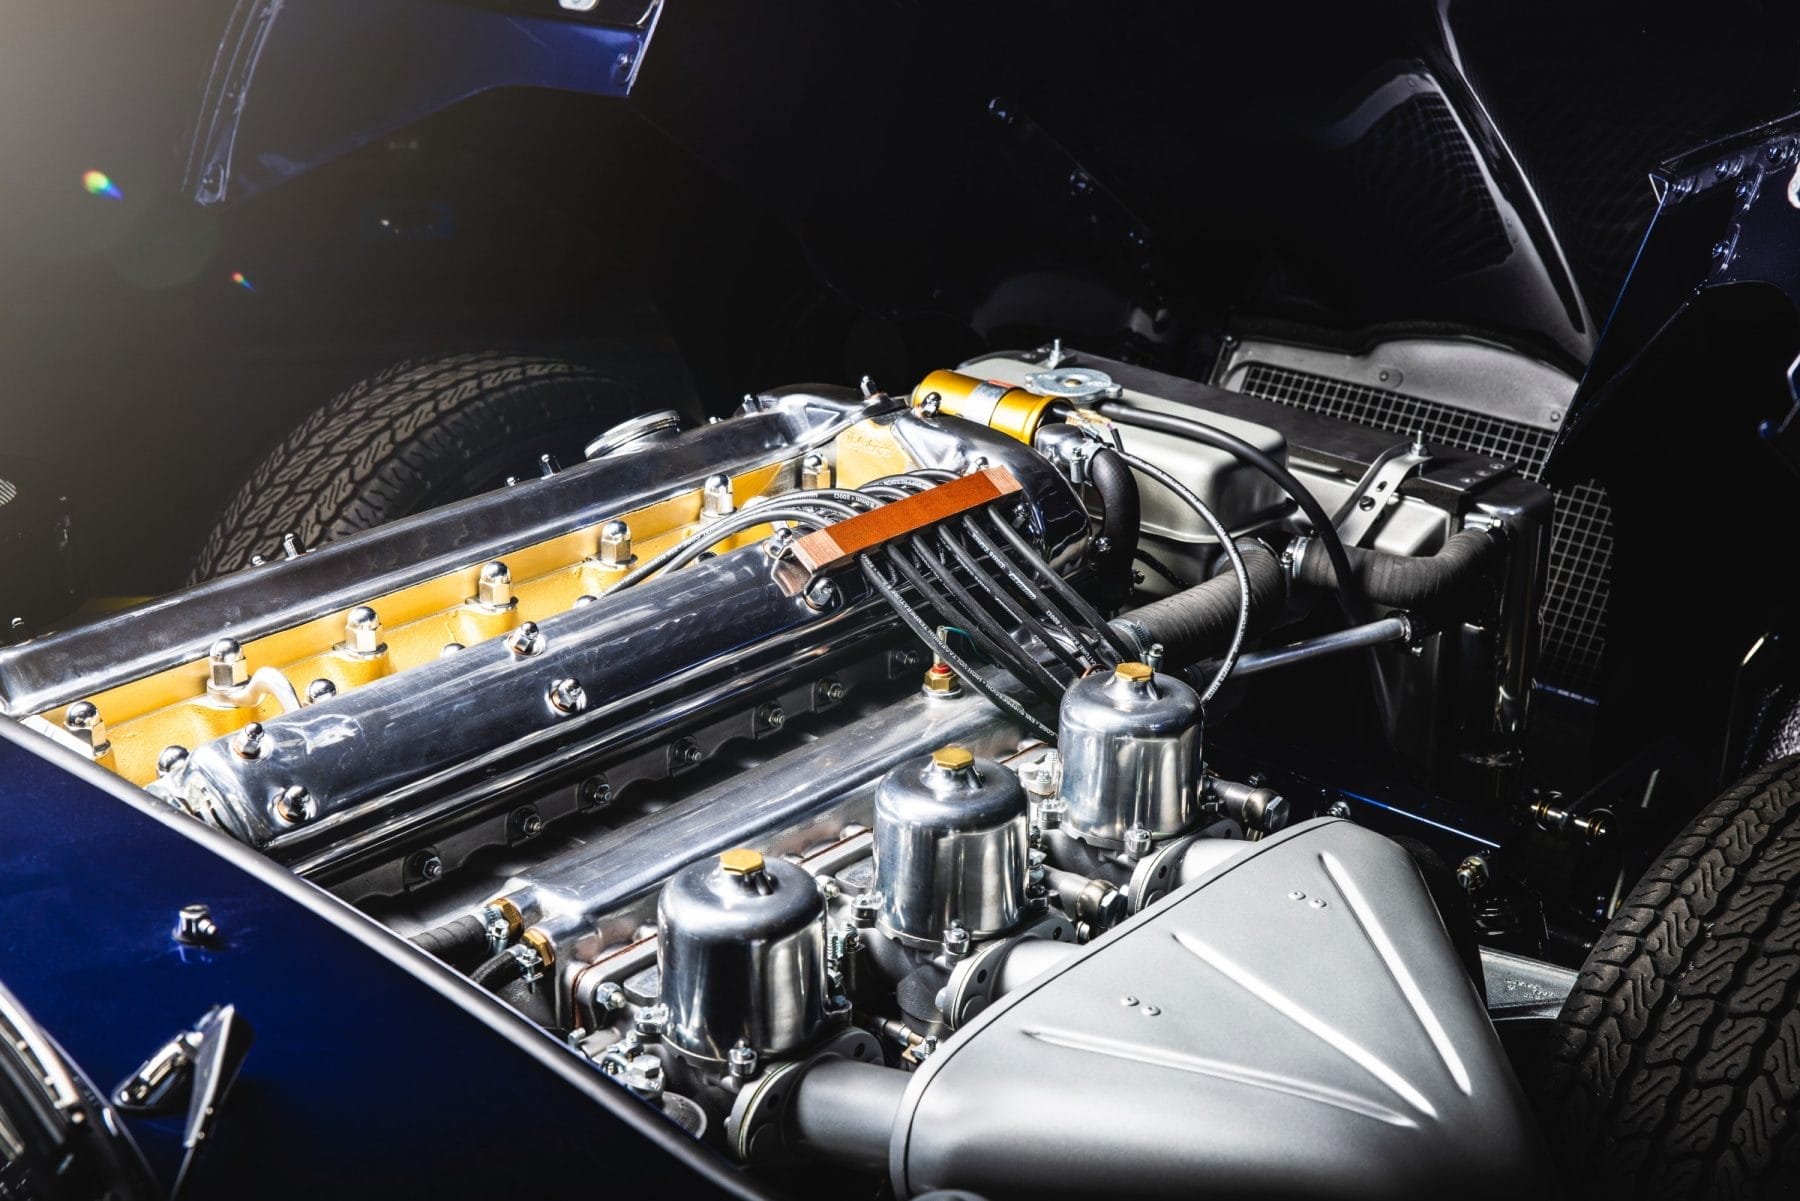 1965 series 1 Jaguar E-Type engine